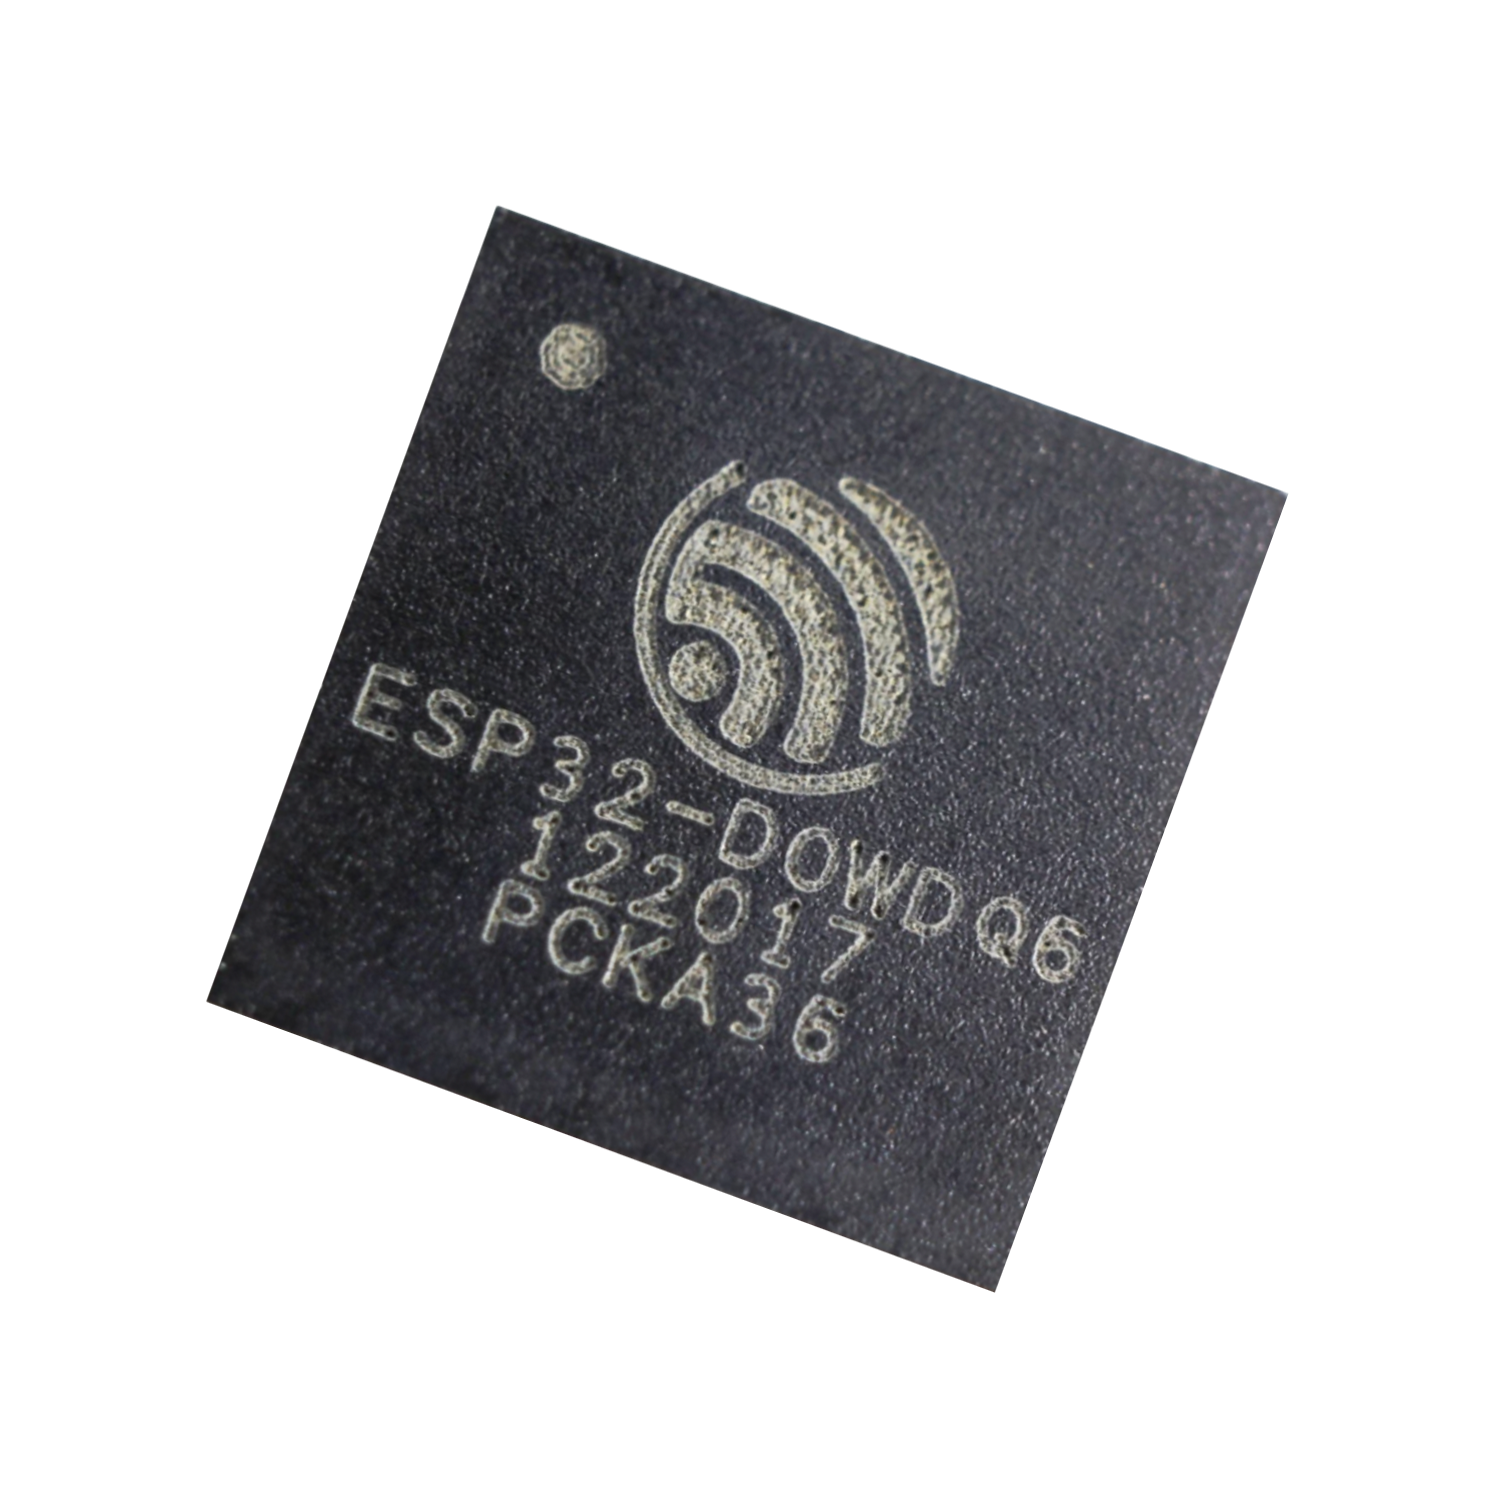  ESP32-DOWDQ6 Product Image 